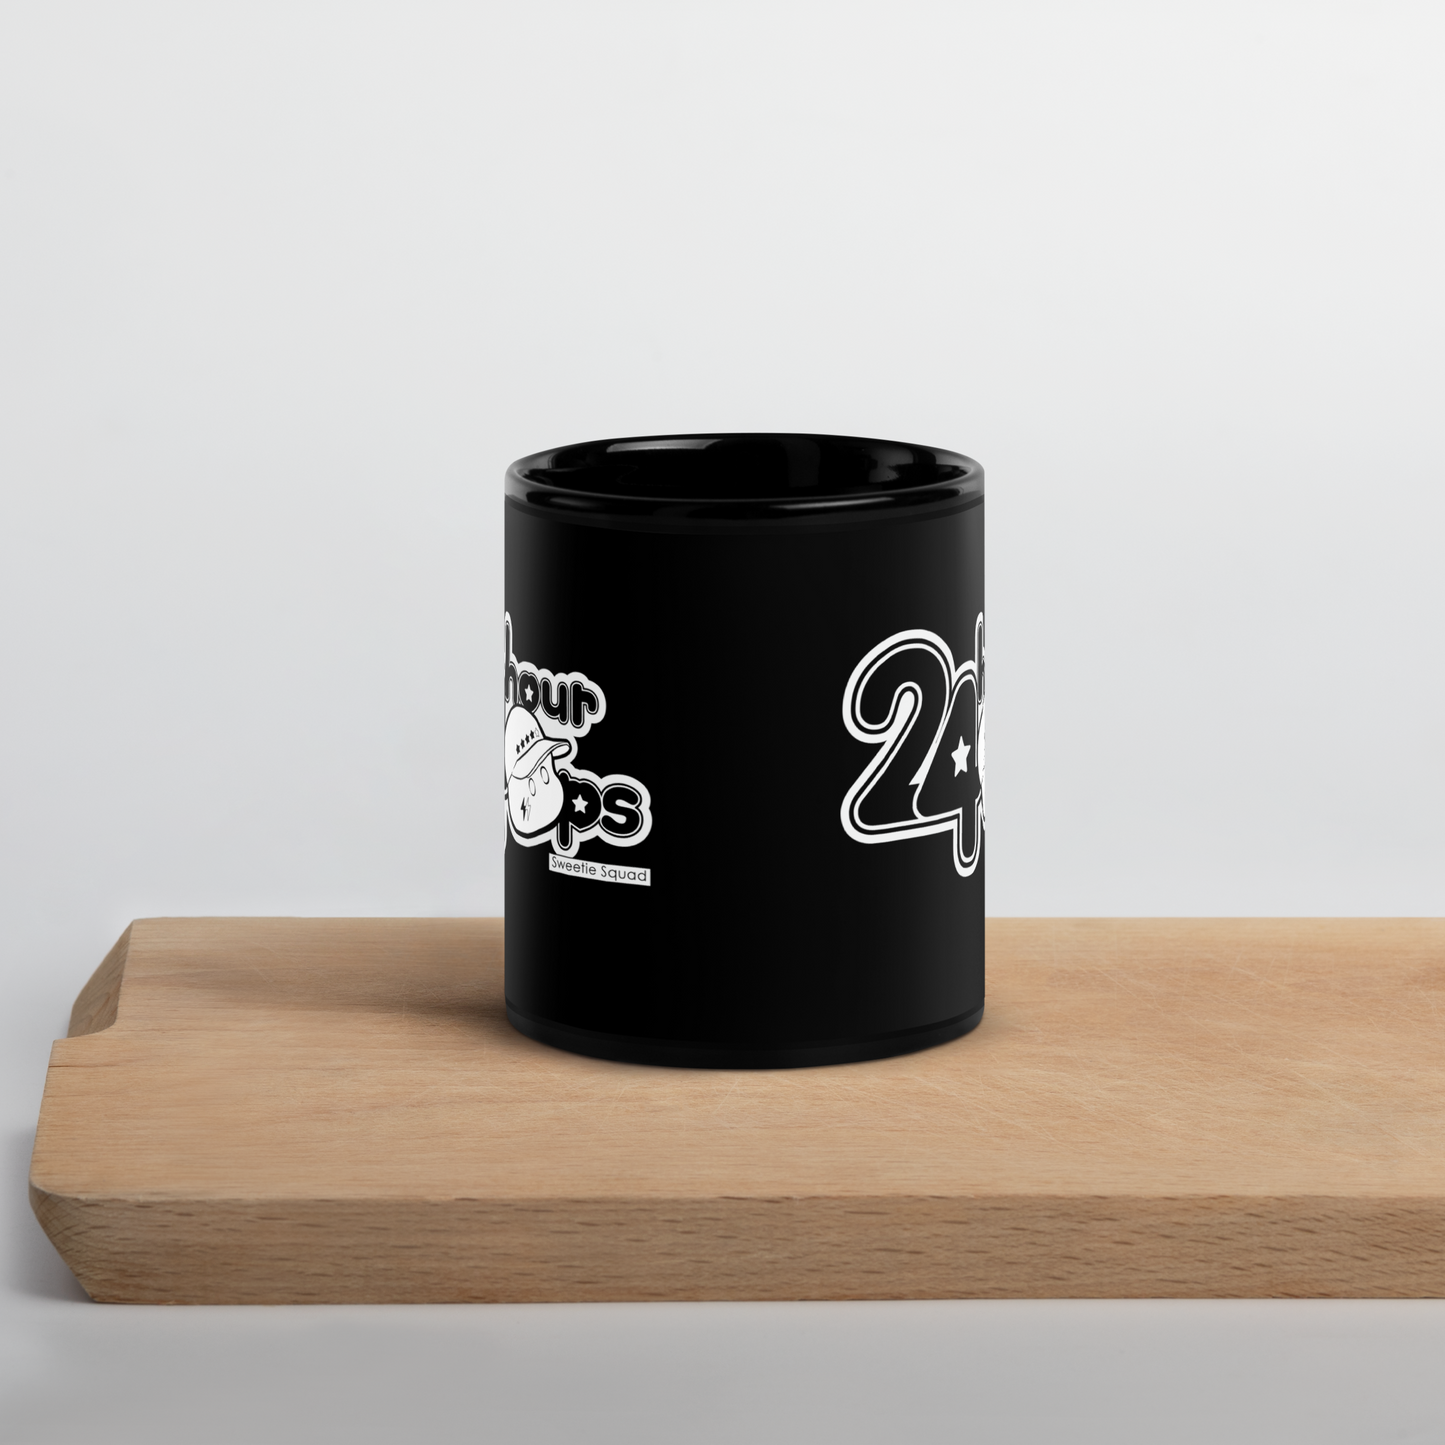 24 Hour Ops - Black Glossy Mug